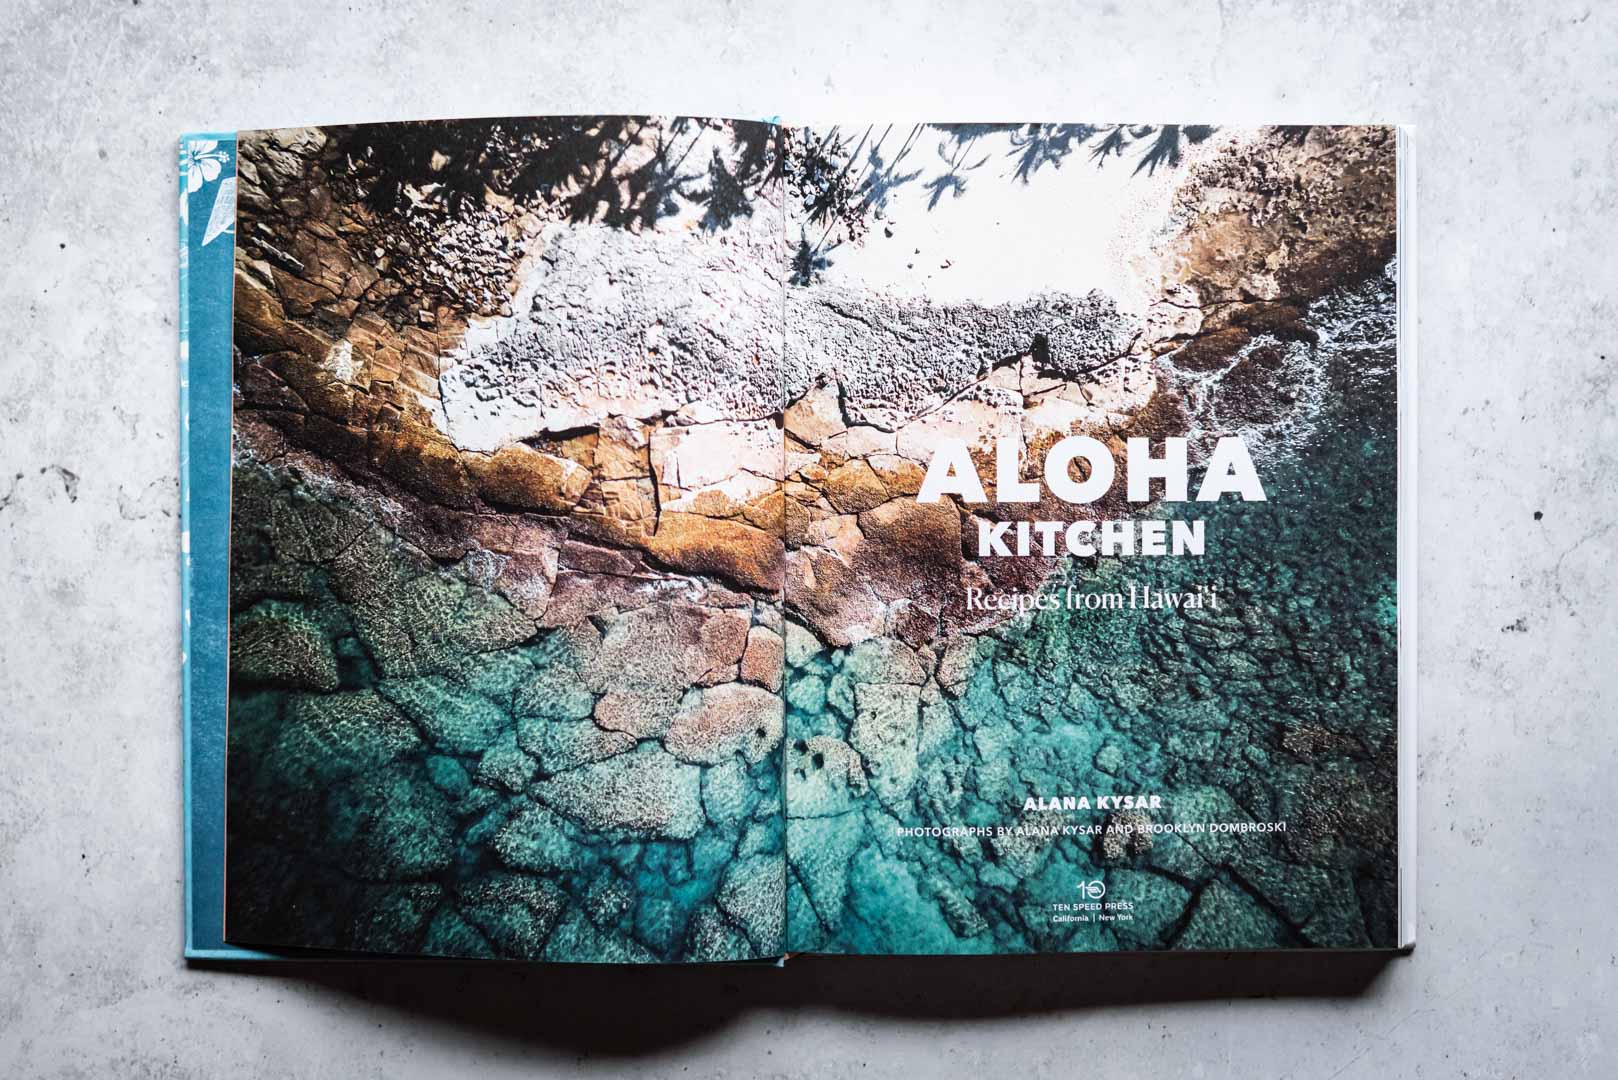 Aloha Kitchen Cookbook by Alana Kysar